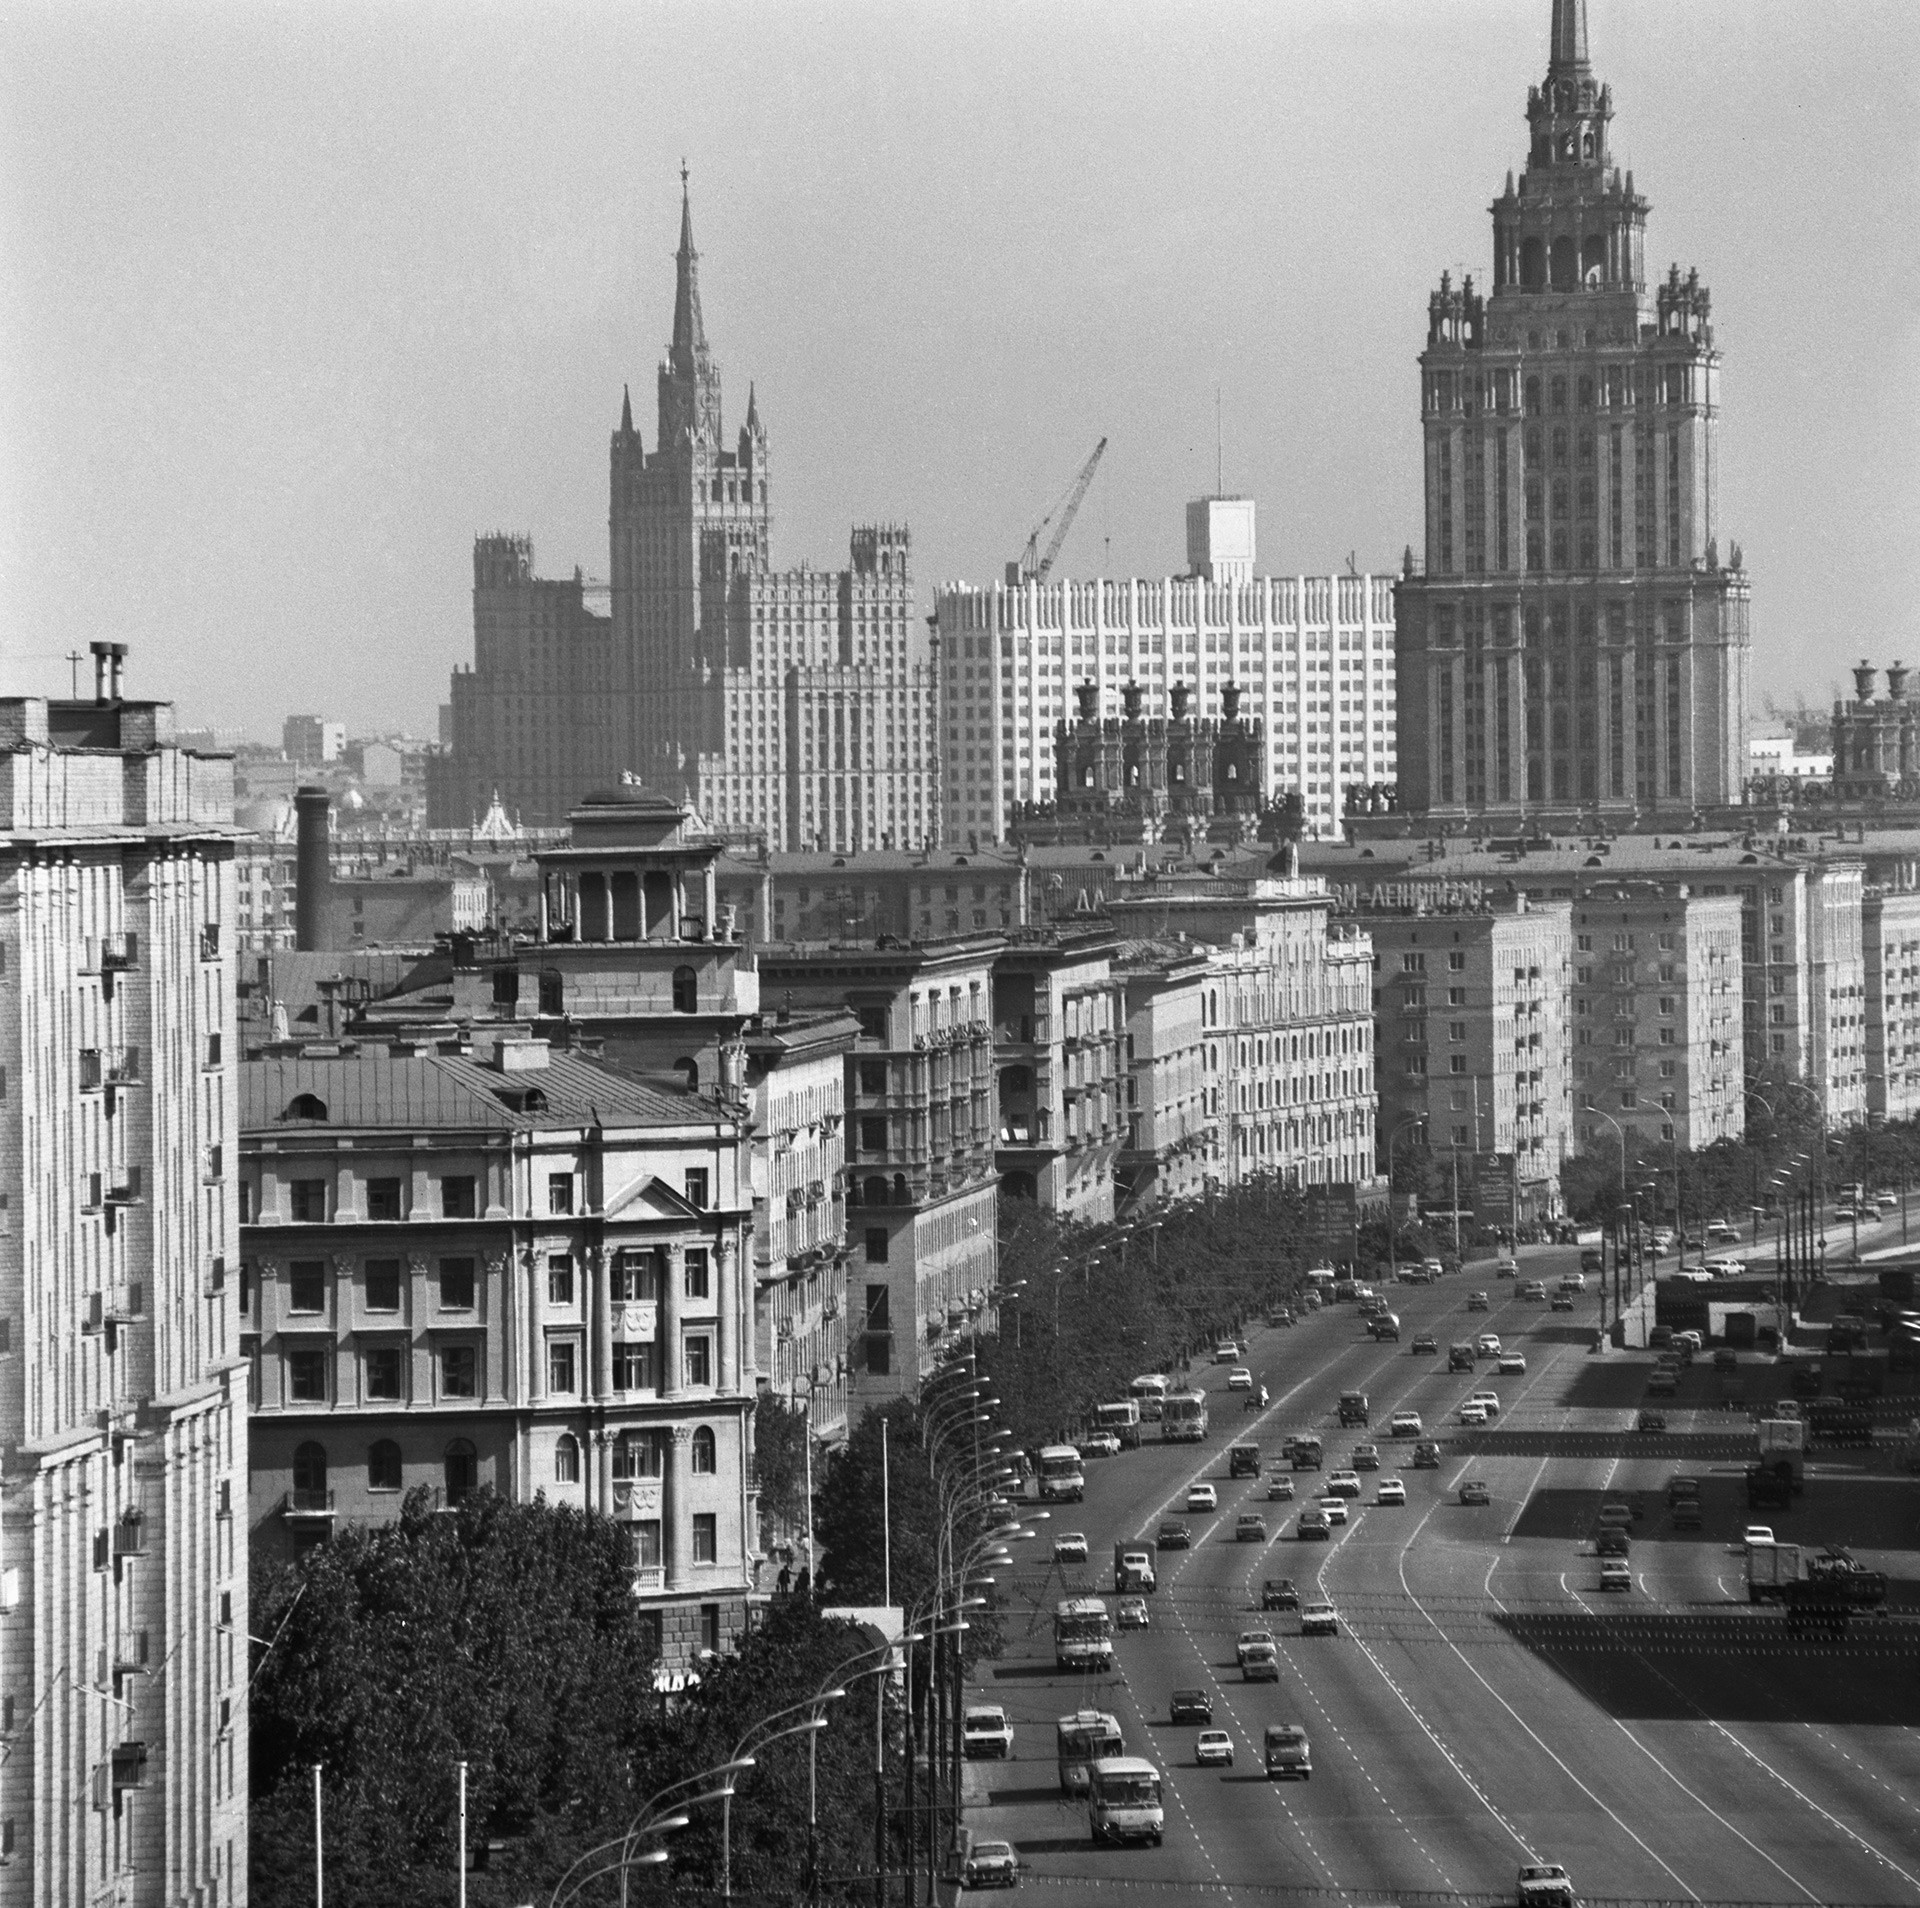 Moscow's Kutuzovsky Prospekt, home to top Soviet officials such as Leonid Brezhnev and Yuri Andropov.